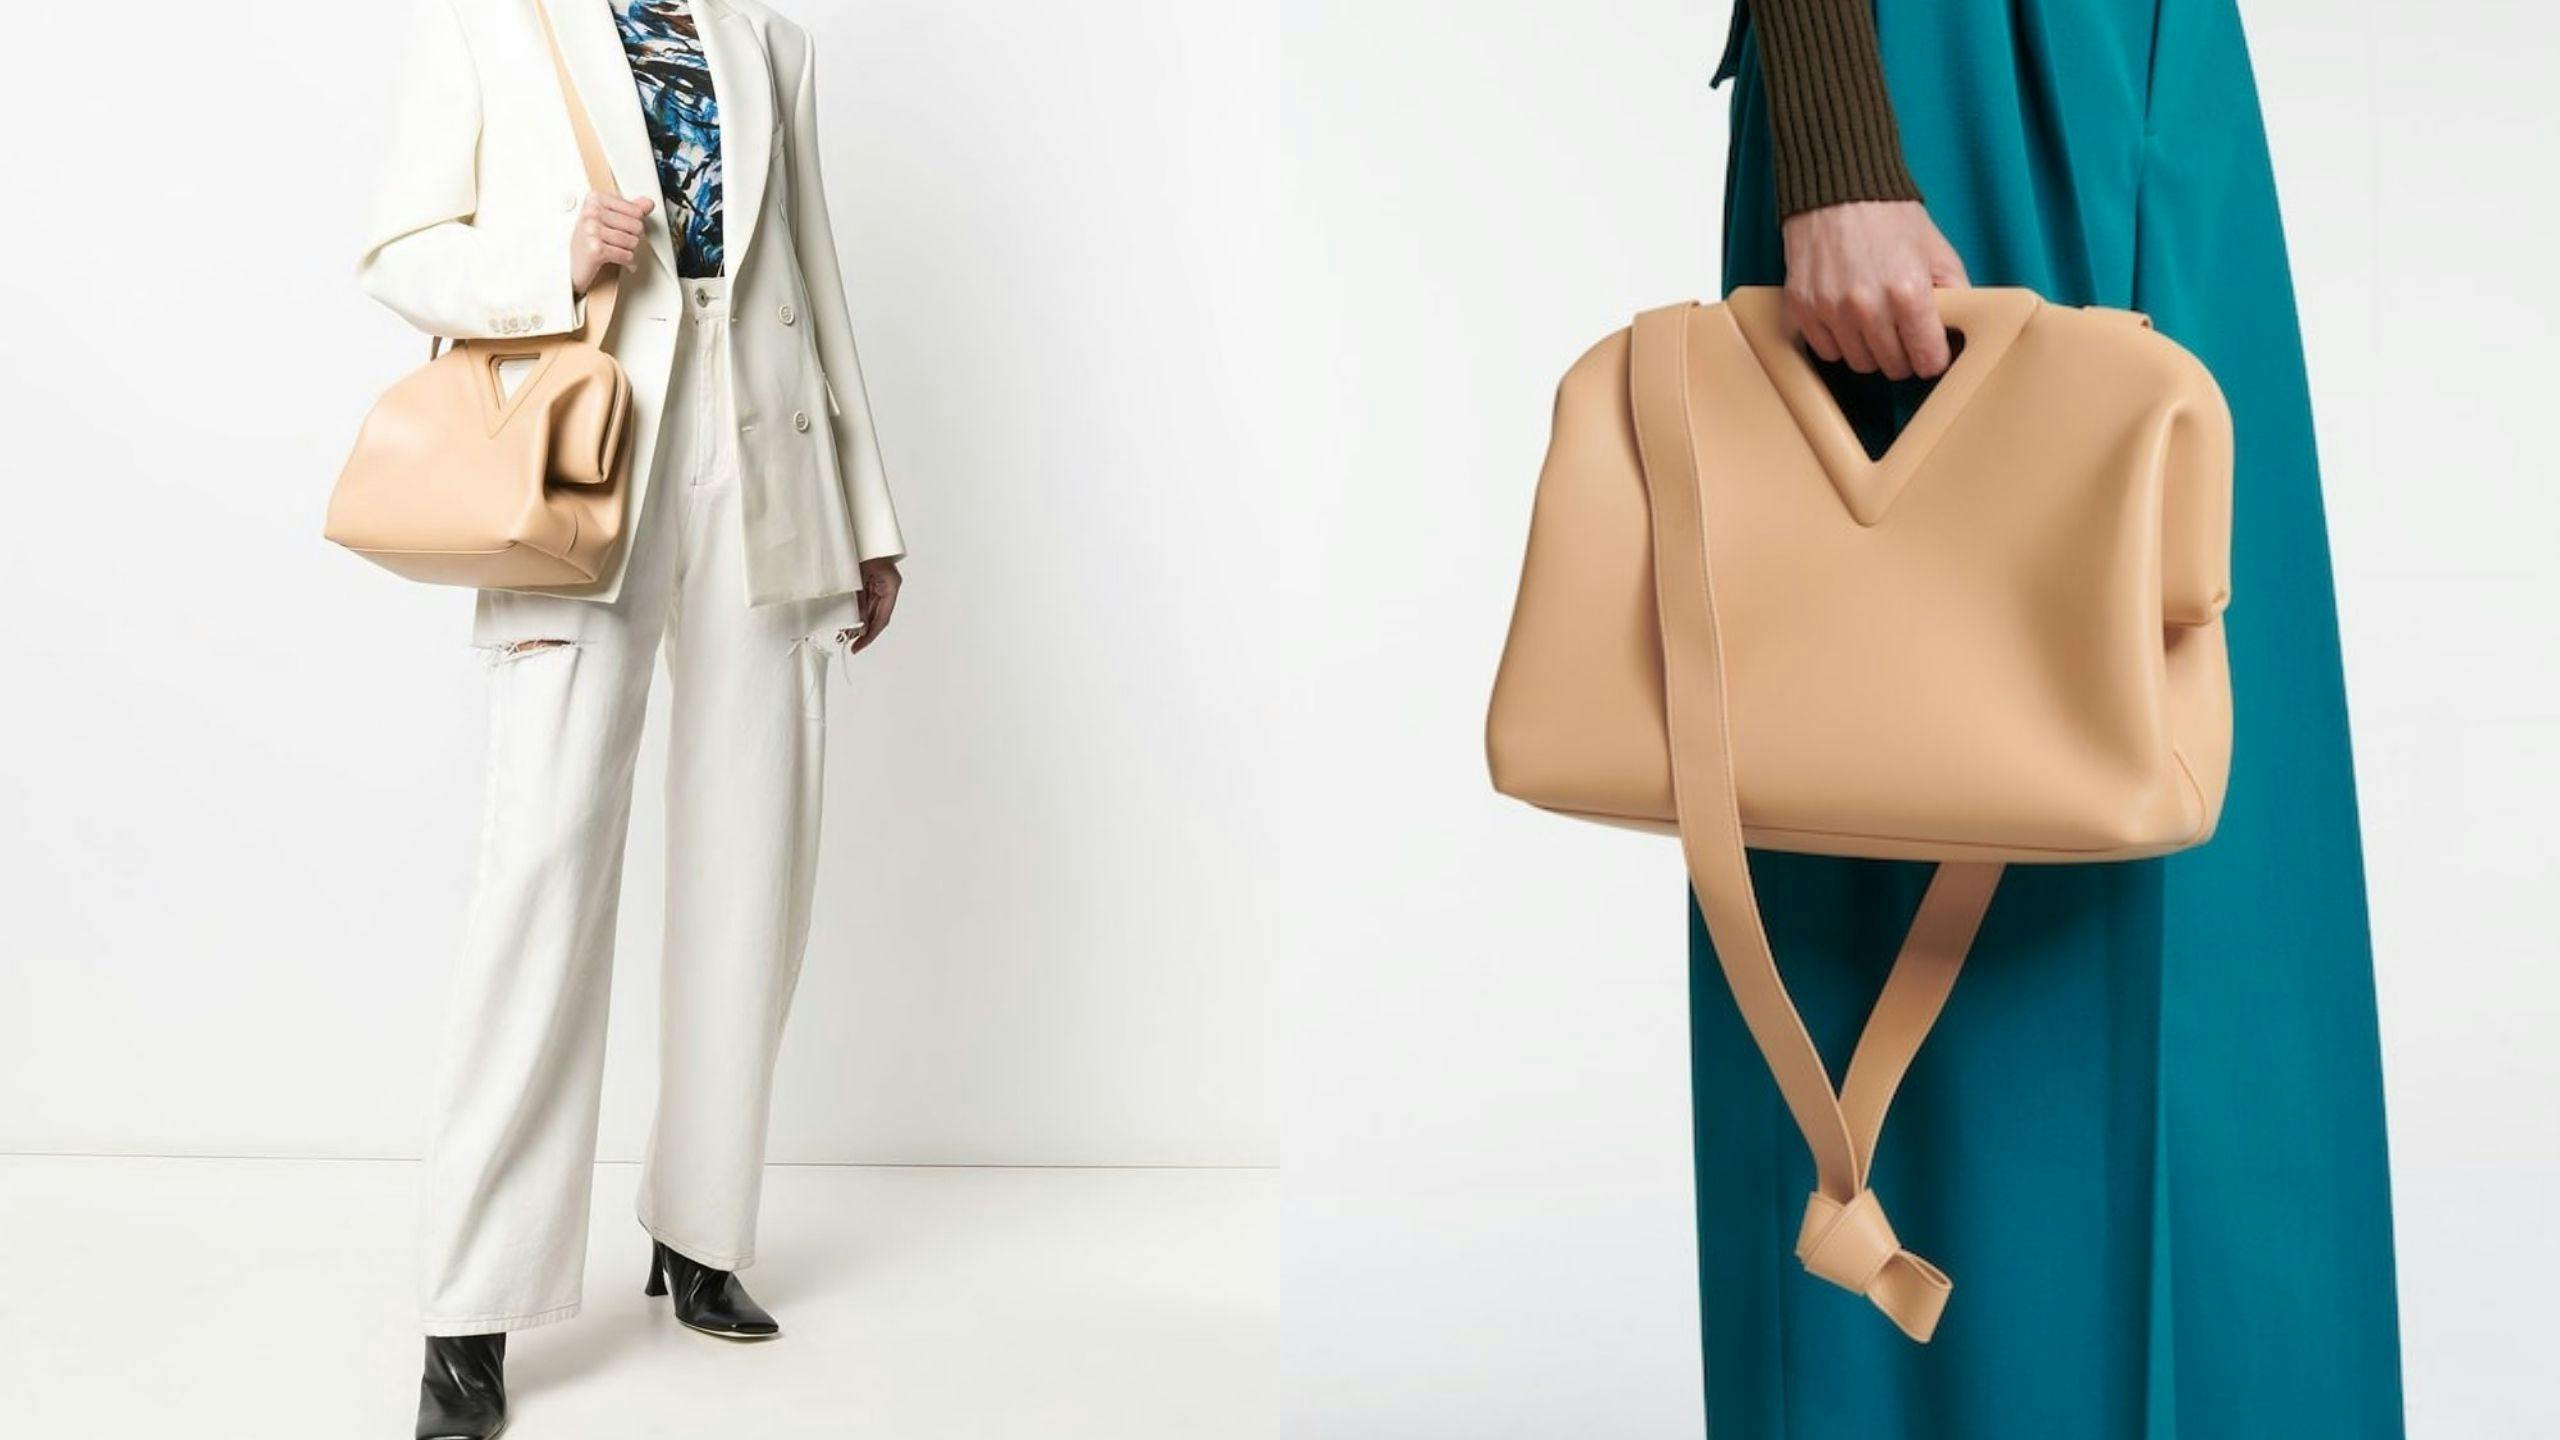 The Point is Bottega Veneta's New It Bag - Pouch Bag Daniel Lee